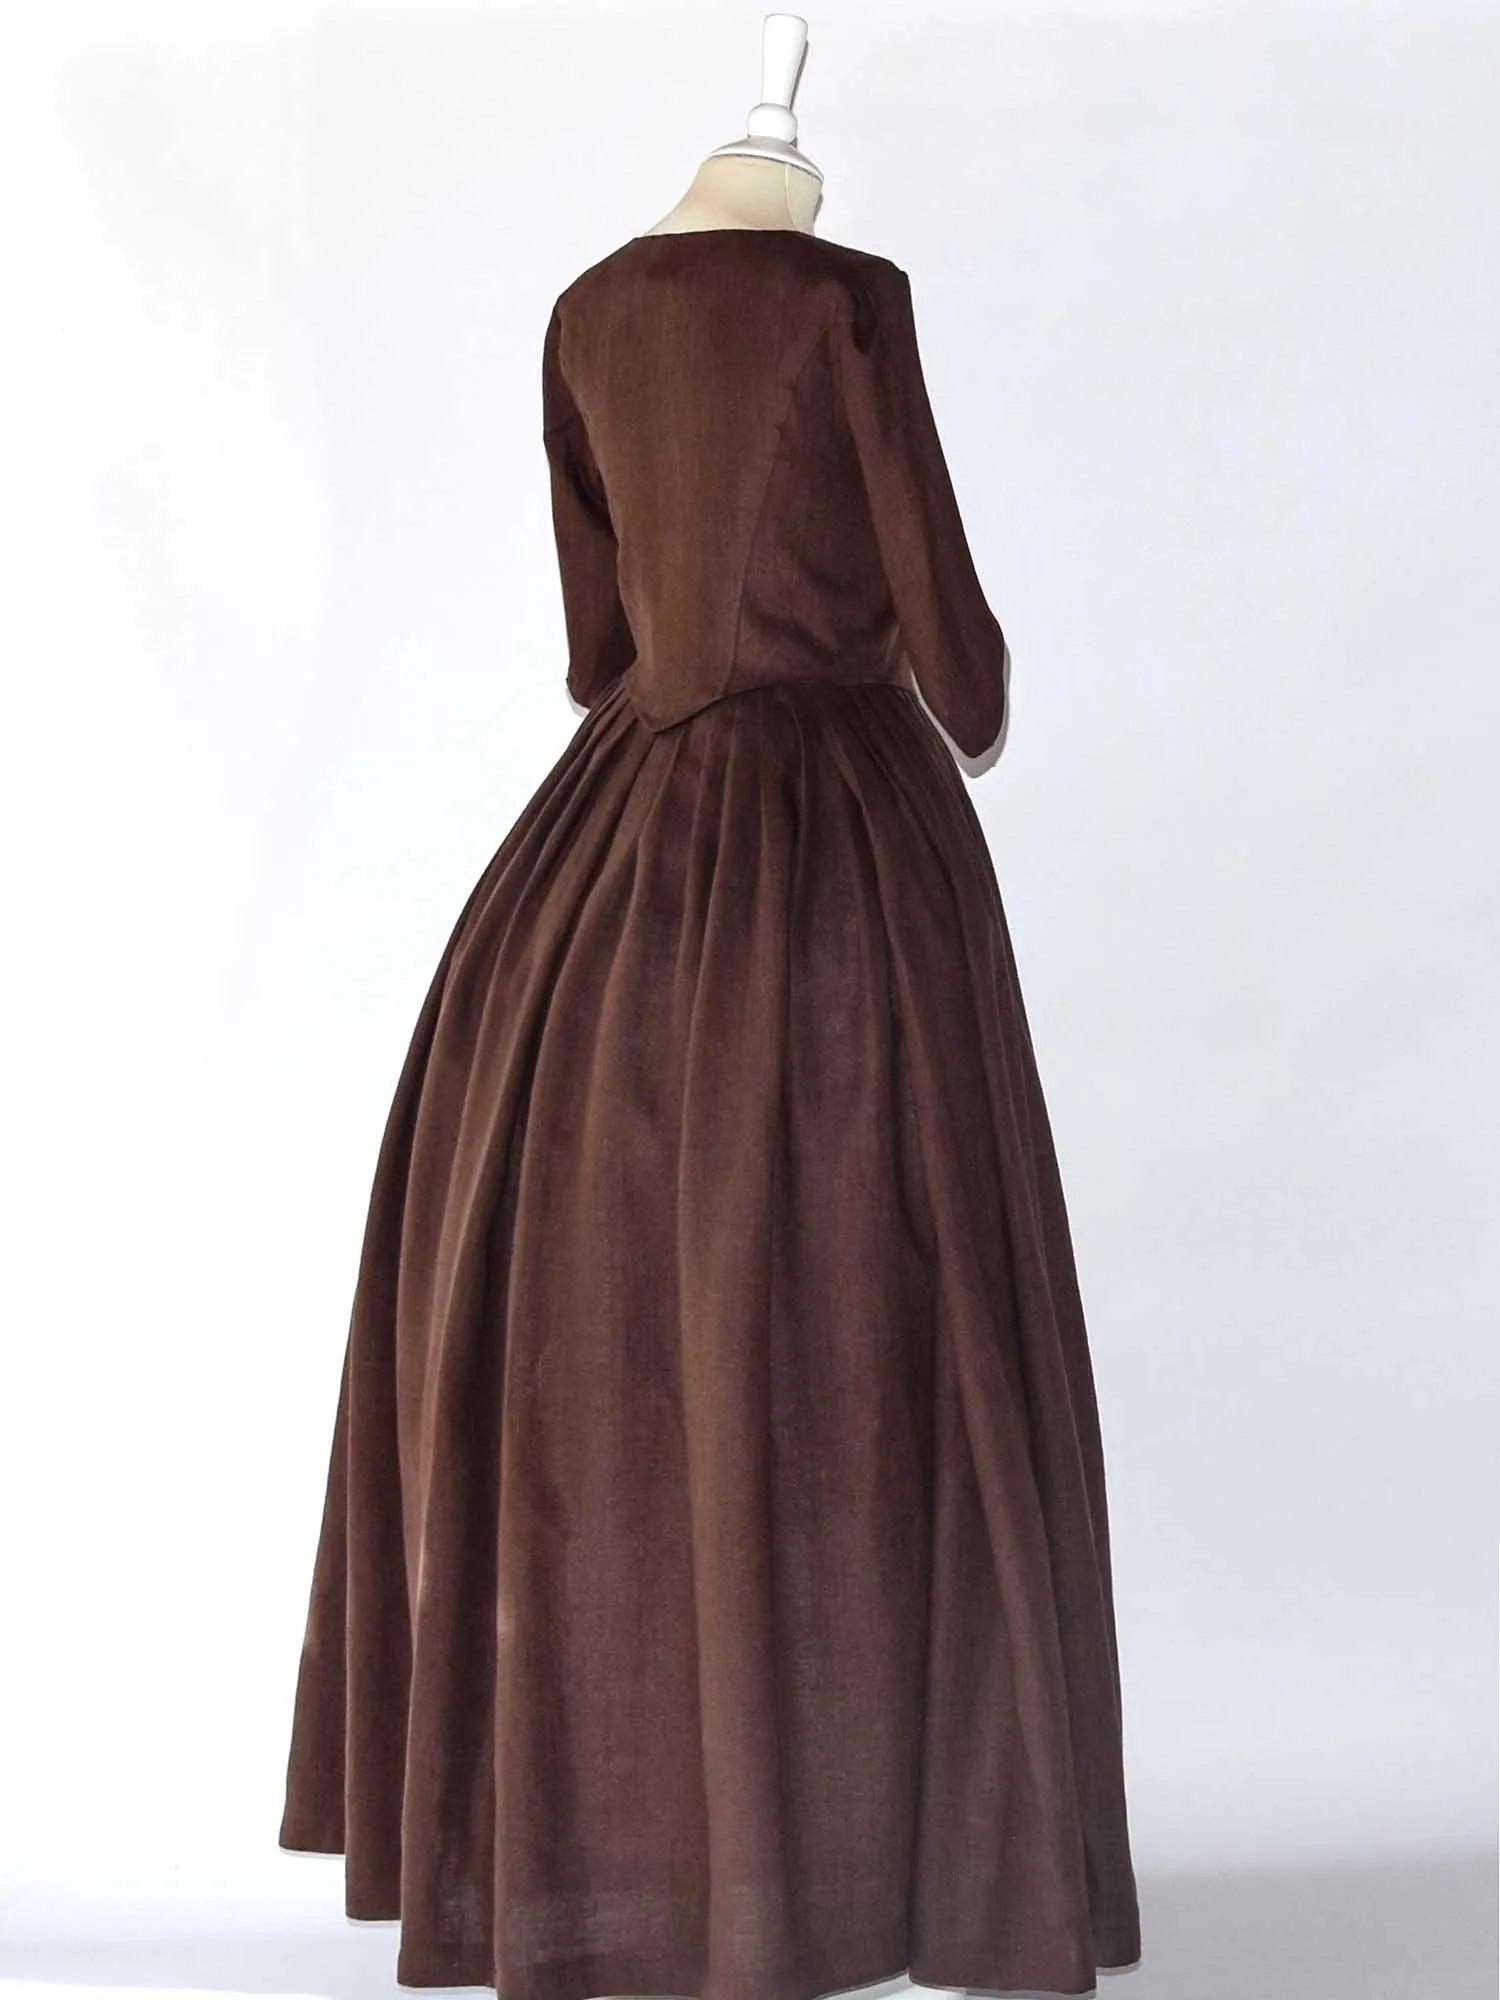 Historical Costume in Dark Brown Linen - Atelier Serraspina